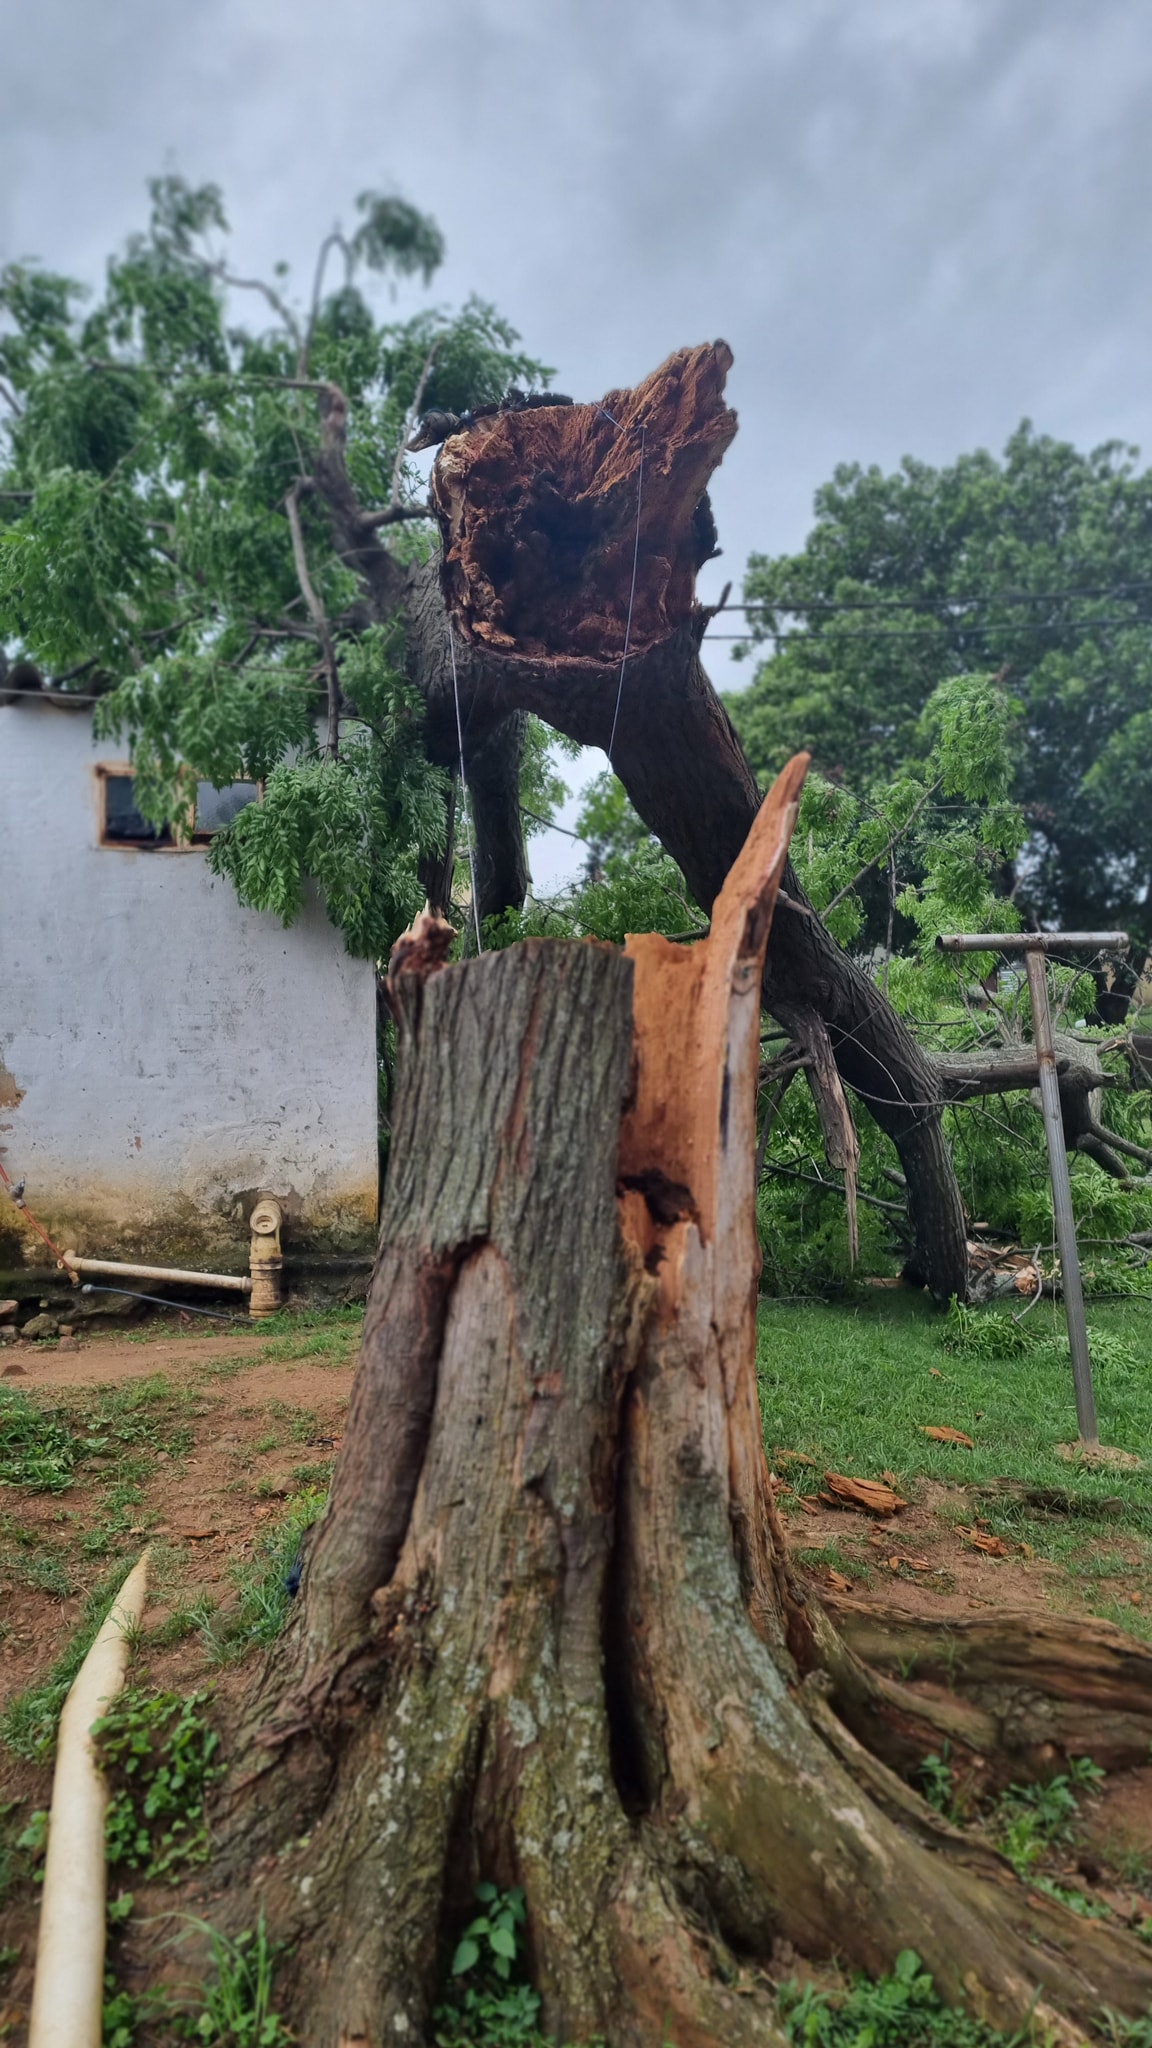 Tree collapses on daycare facility in Hambanathi